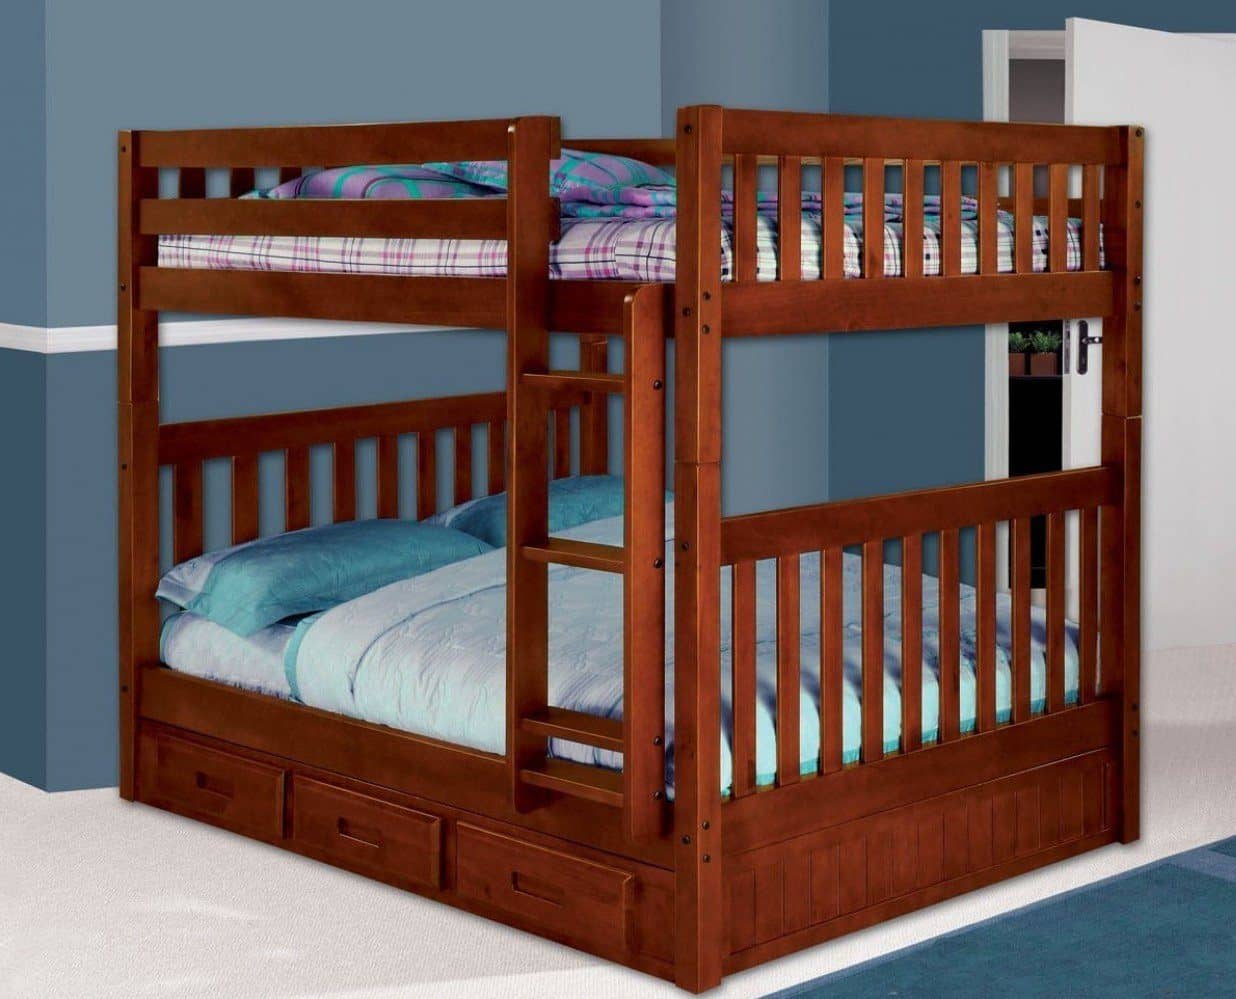 Abigail Full Bunk Bed with Storage Custom Kids Furniture